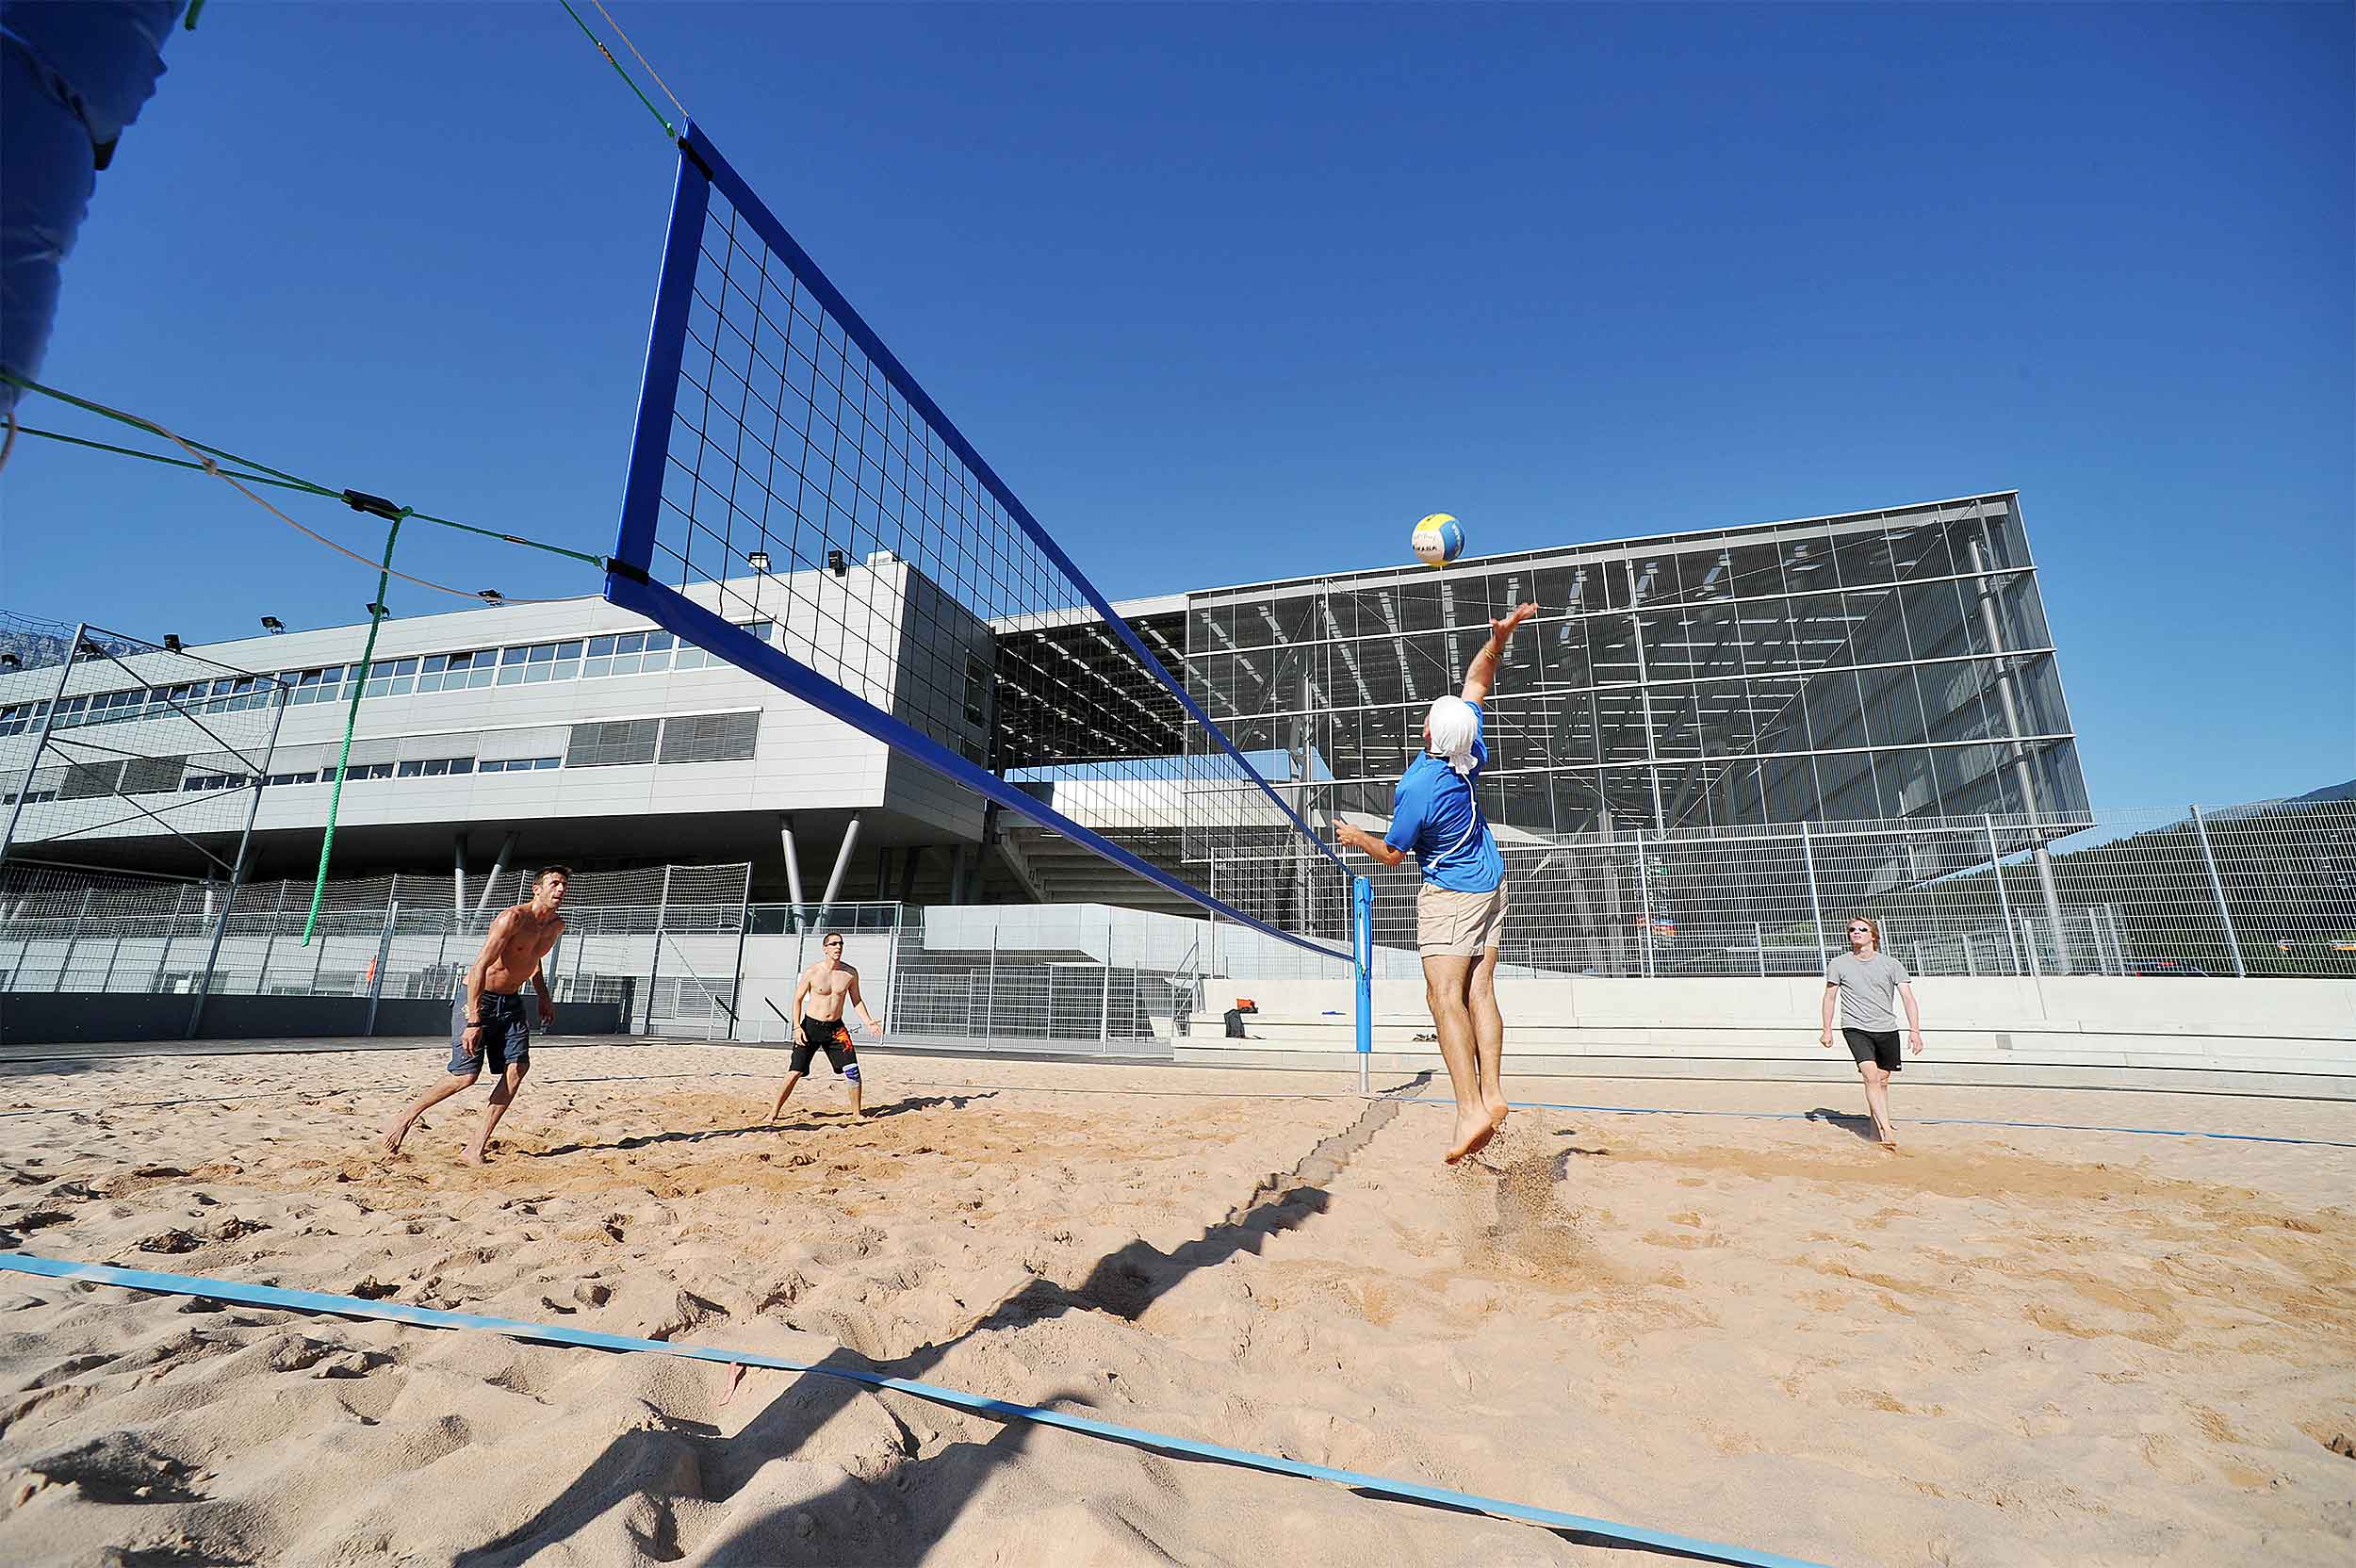 Olympiaworld Innsbruck beach volleyball court